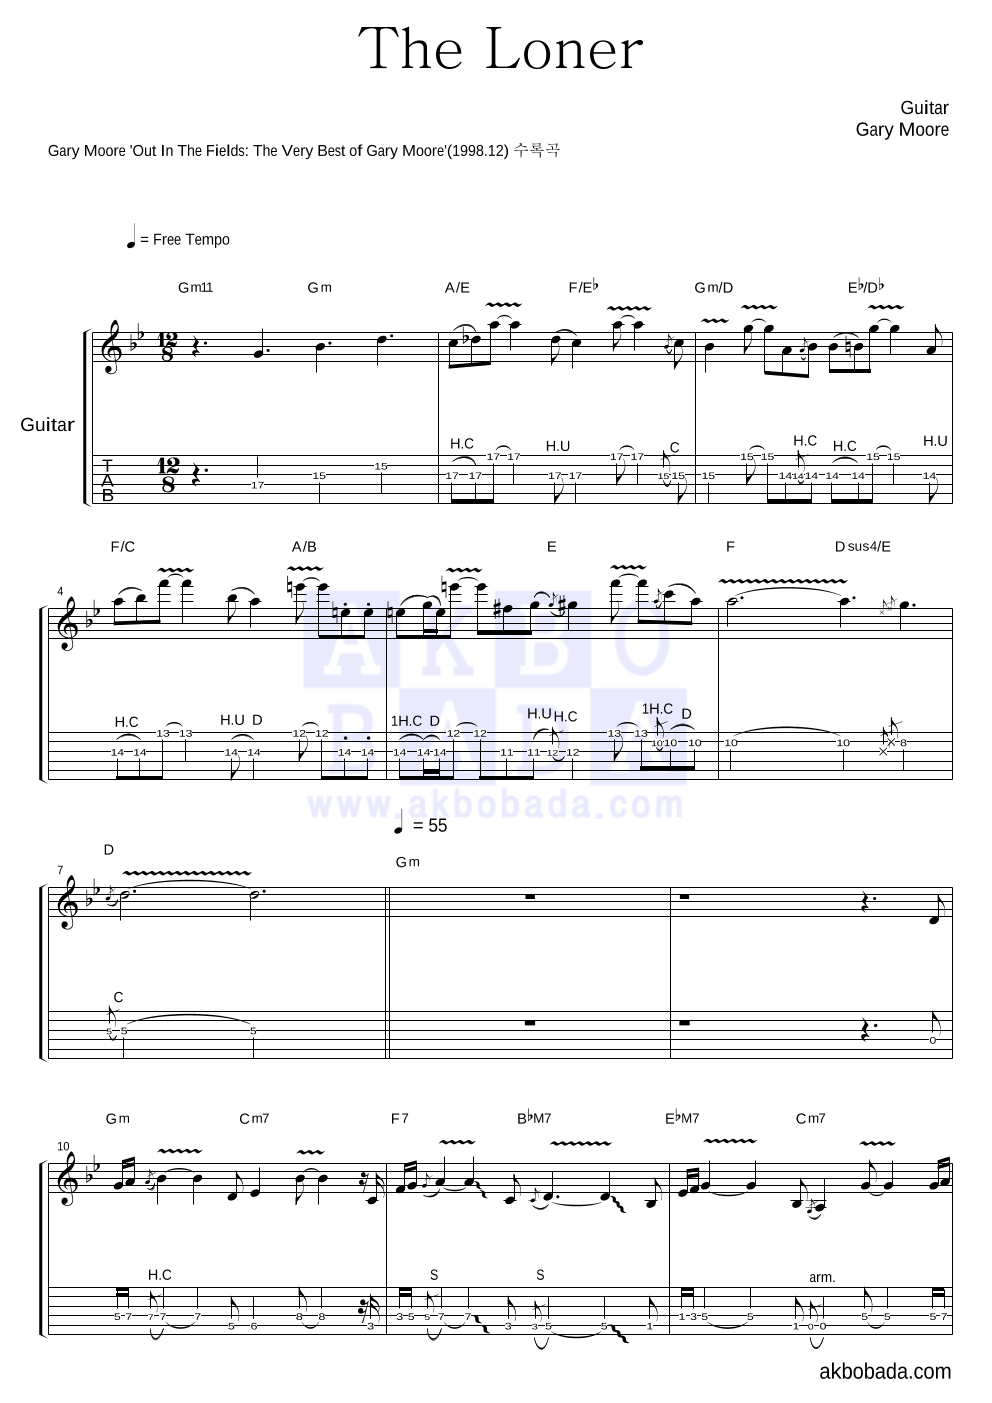 Gary Moore - The Loner 기타 악보 